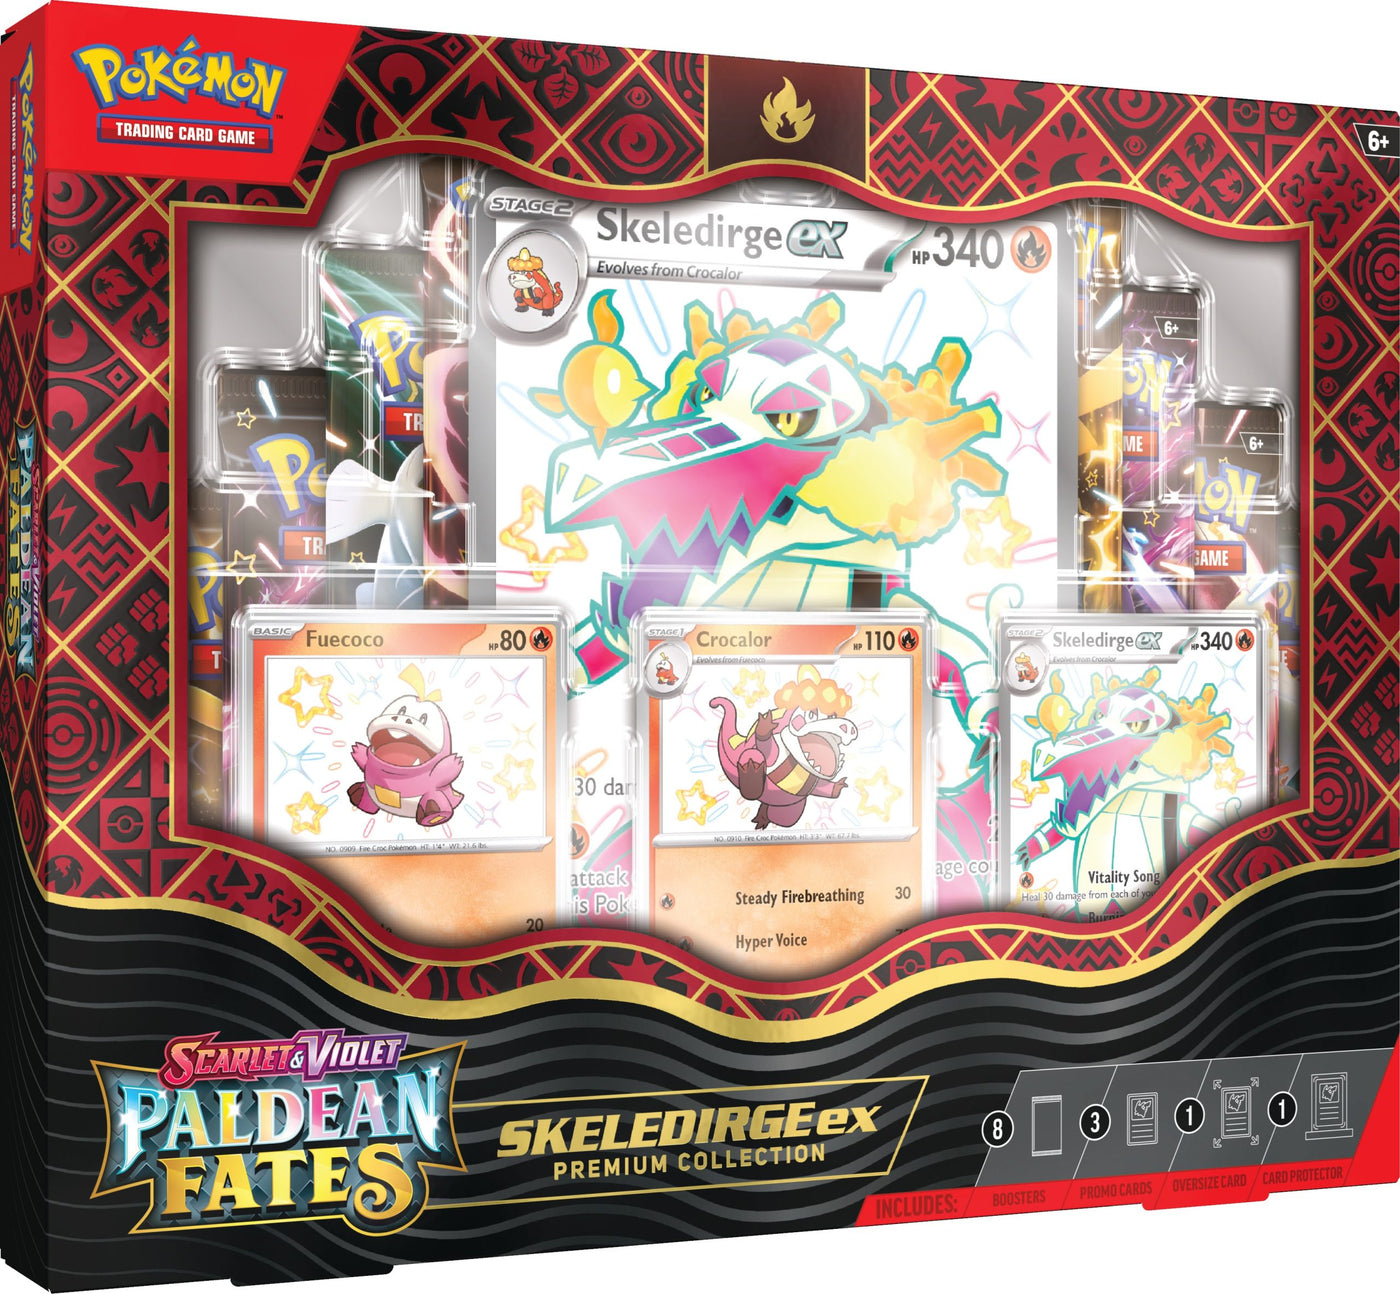 Pokemon TCG Scarlet & Violet Paldean Fates Premium Collection Box - Skeledirge ex